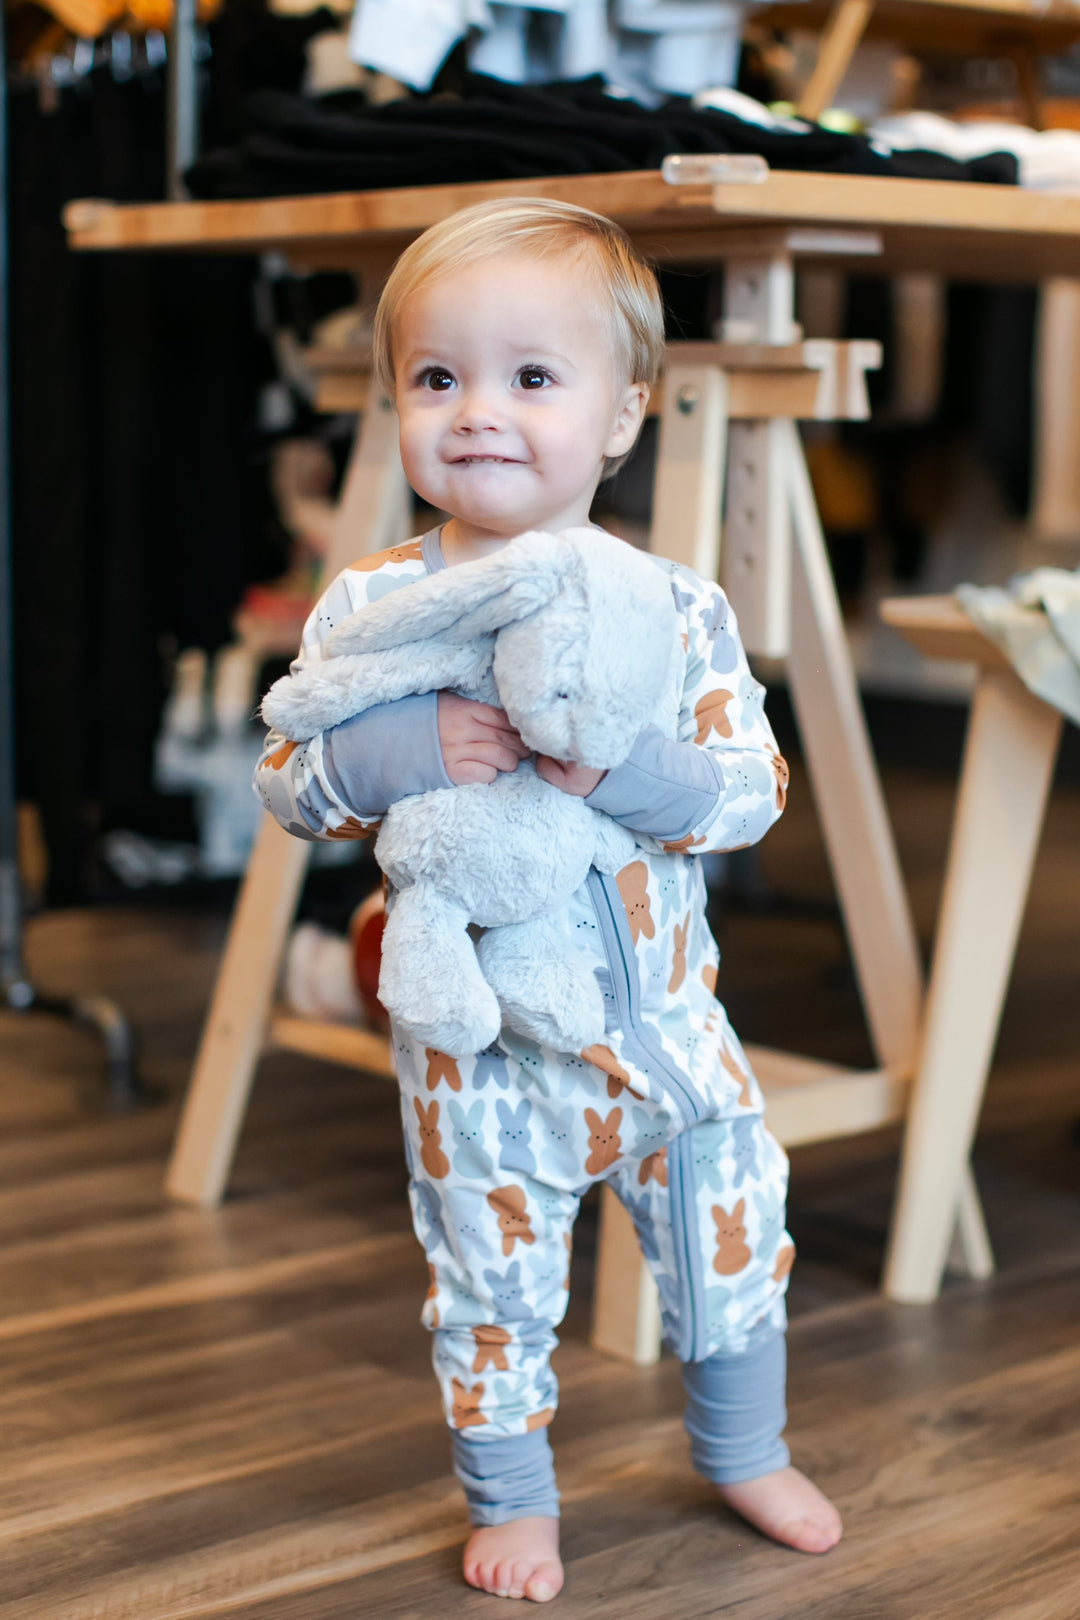 Mebie Baby - Bamboo ZIpper Pajamas in Blue Bunny